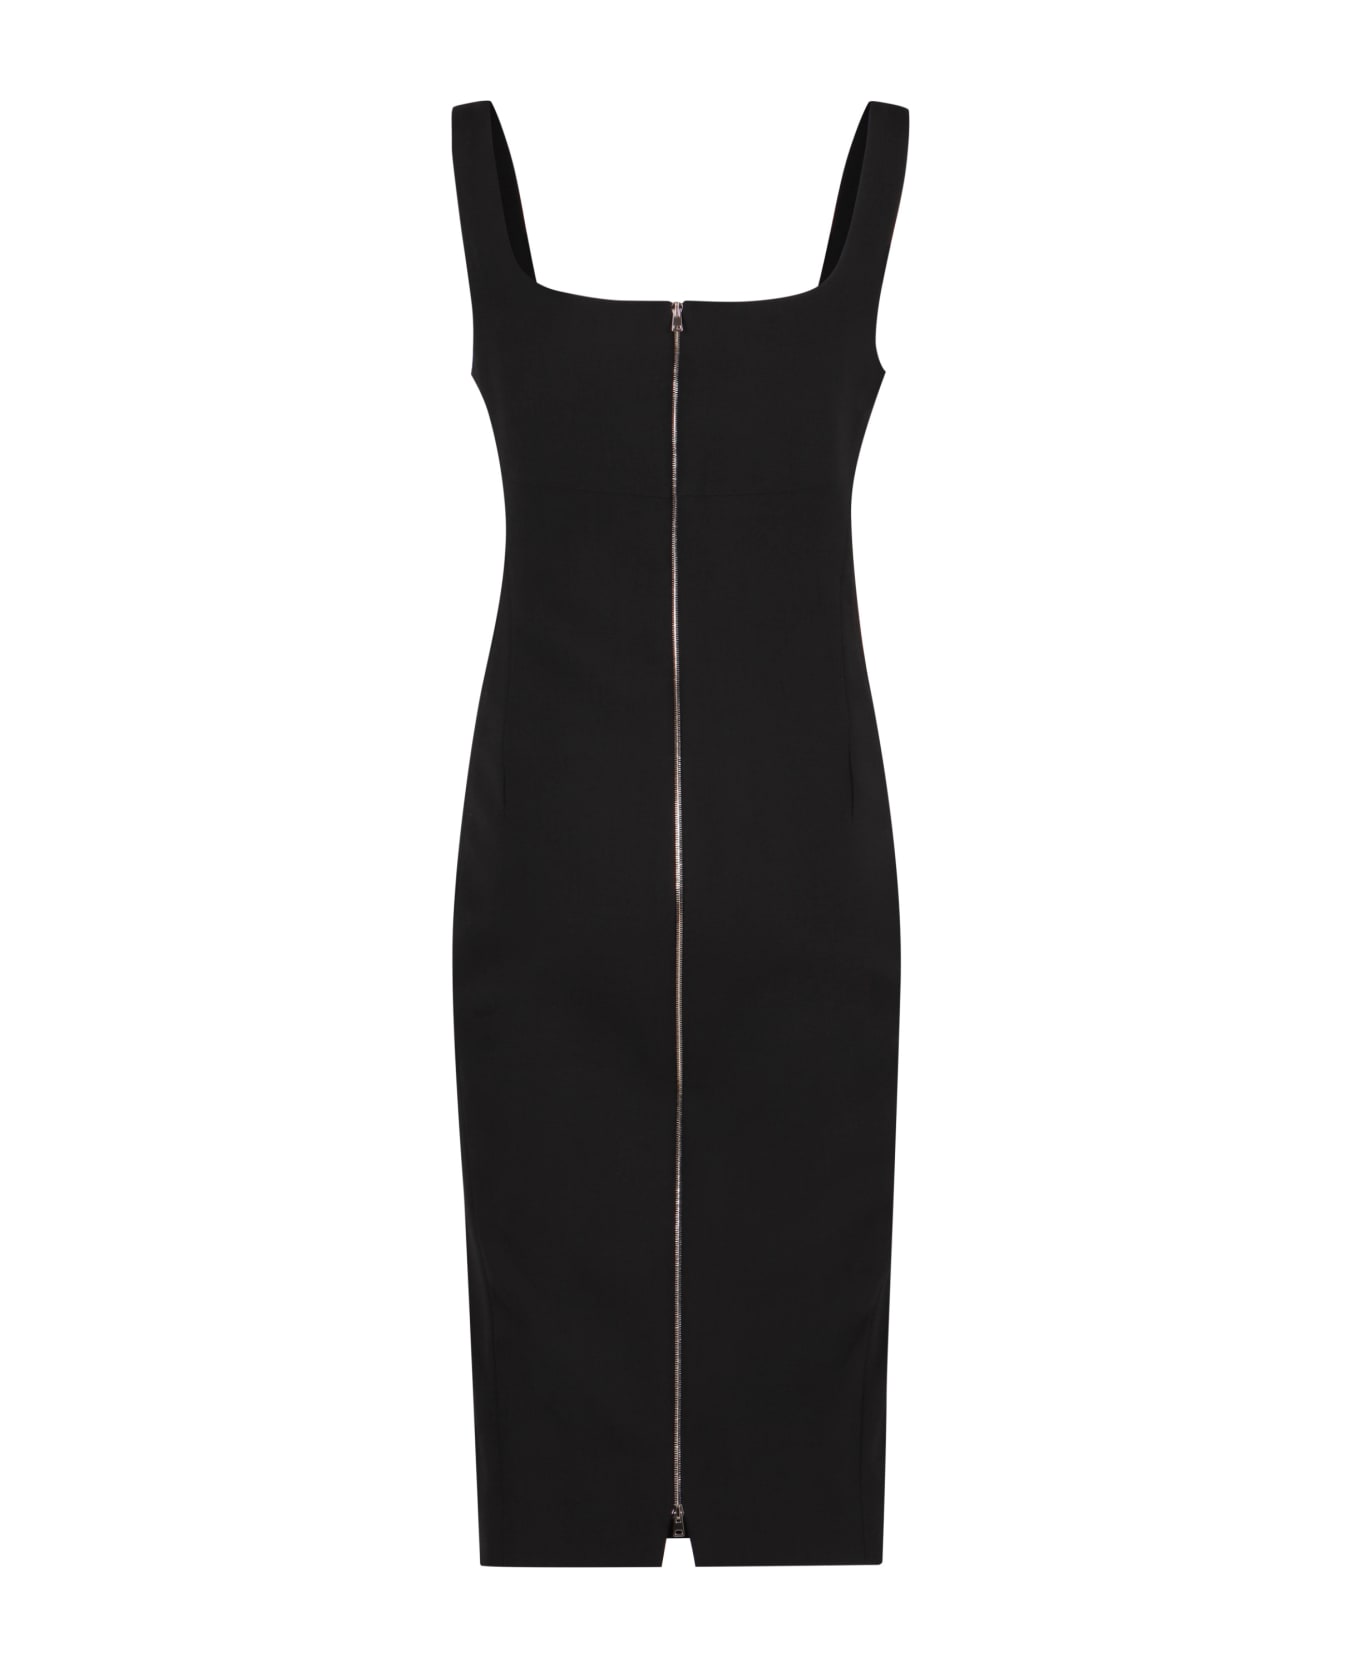 Victoria Beckham Sheath Dress - black